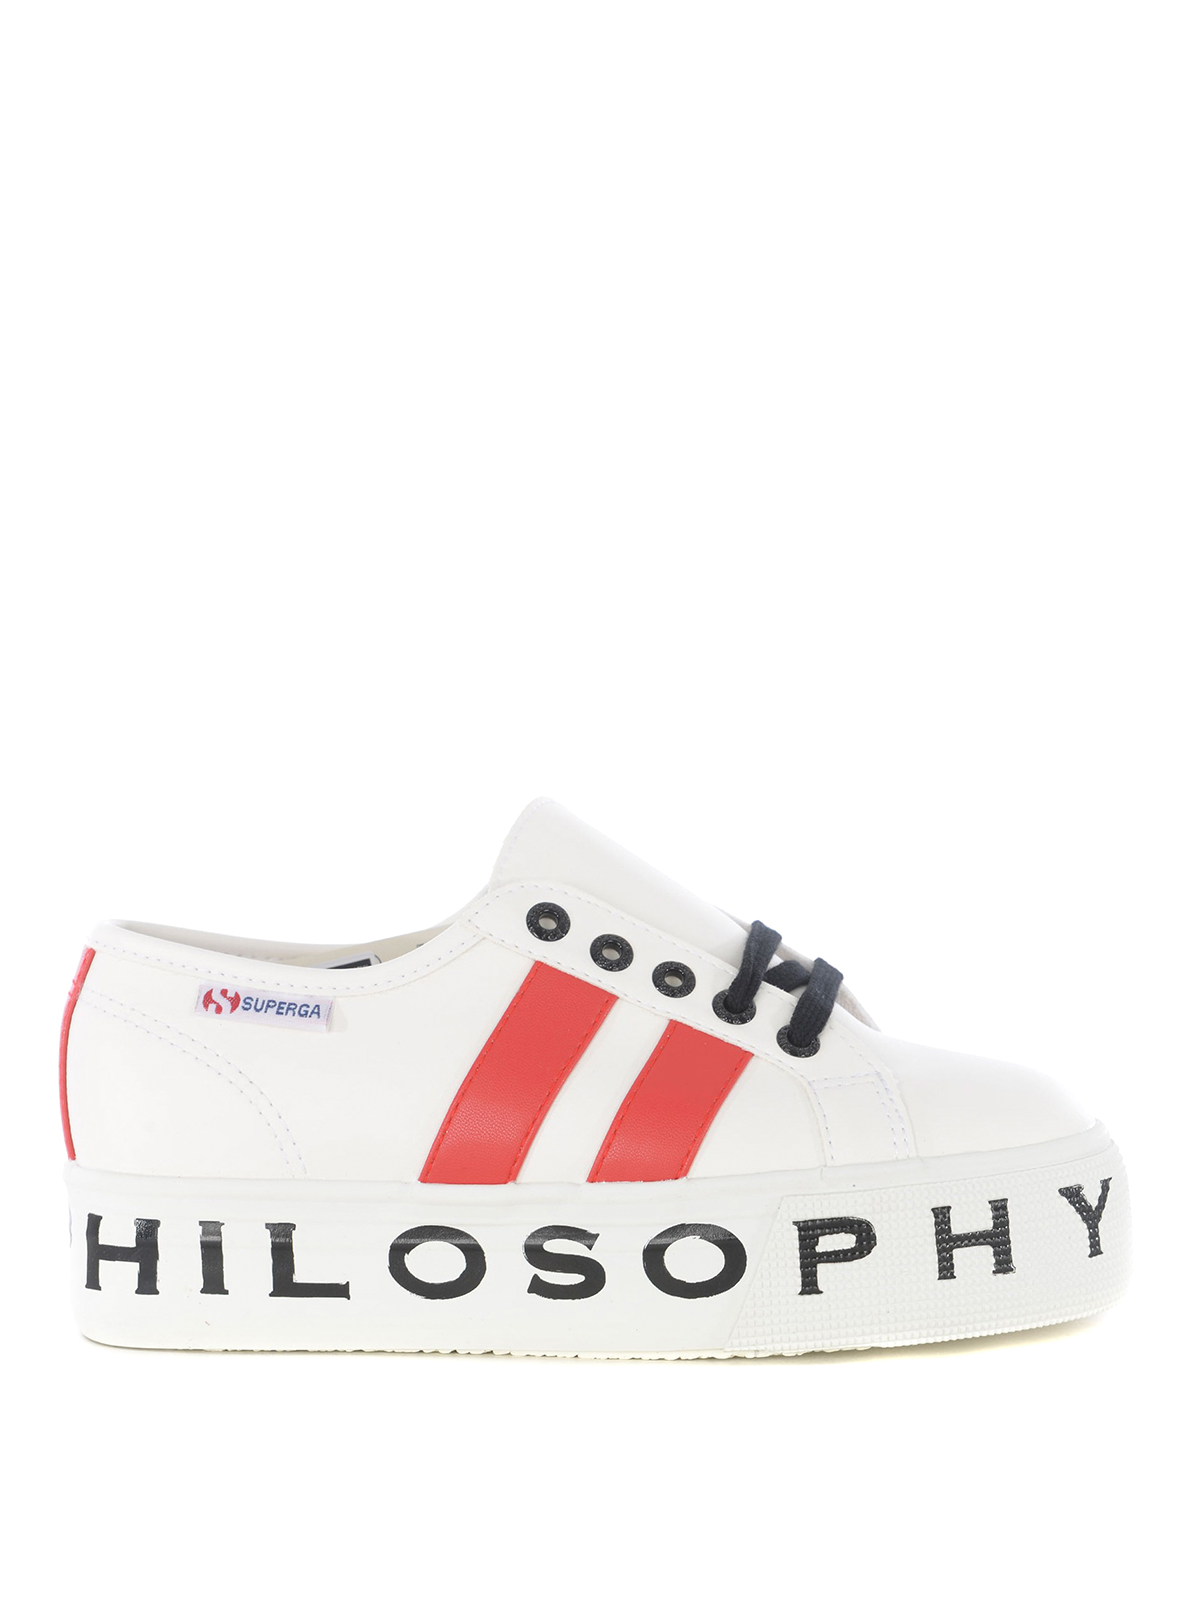 scarpe philosophy superga prezzo